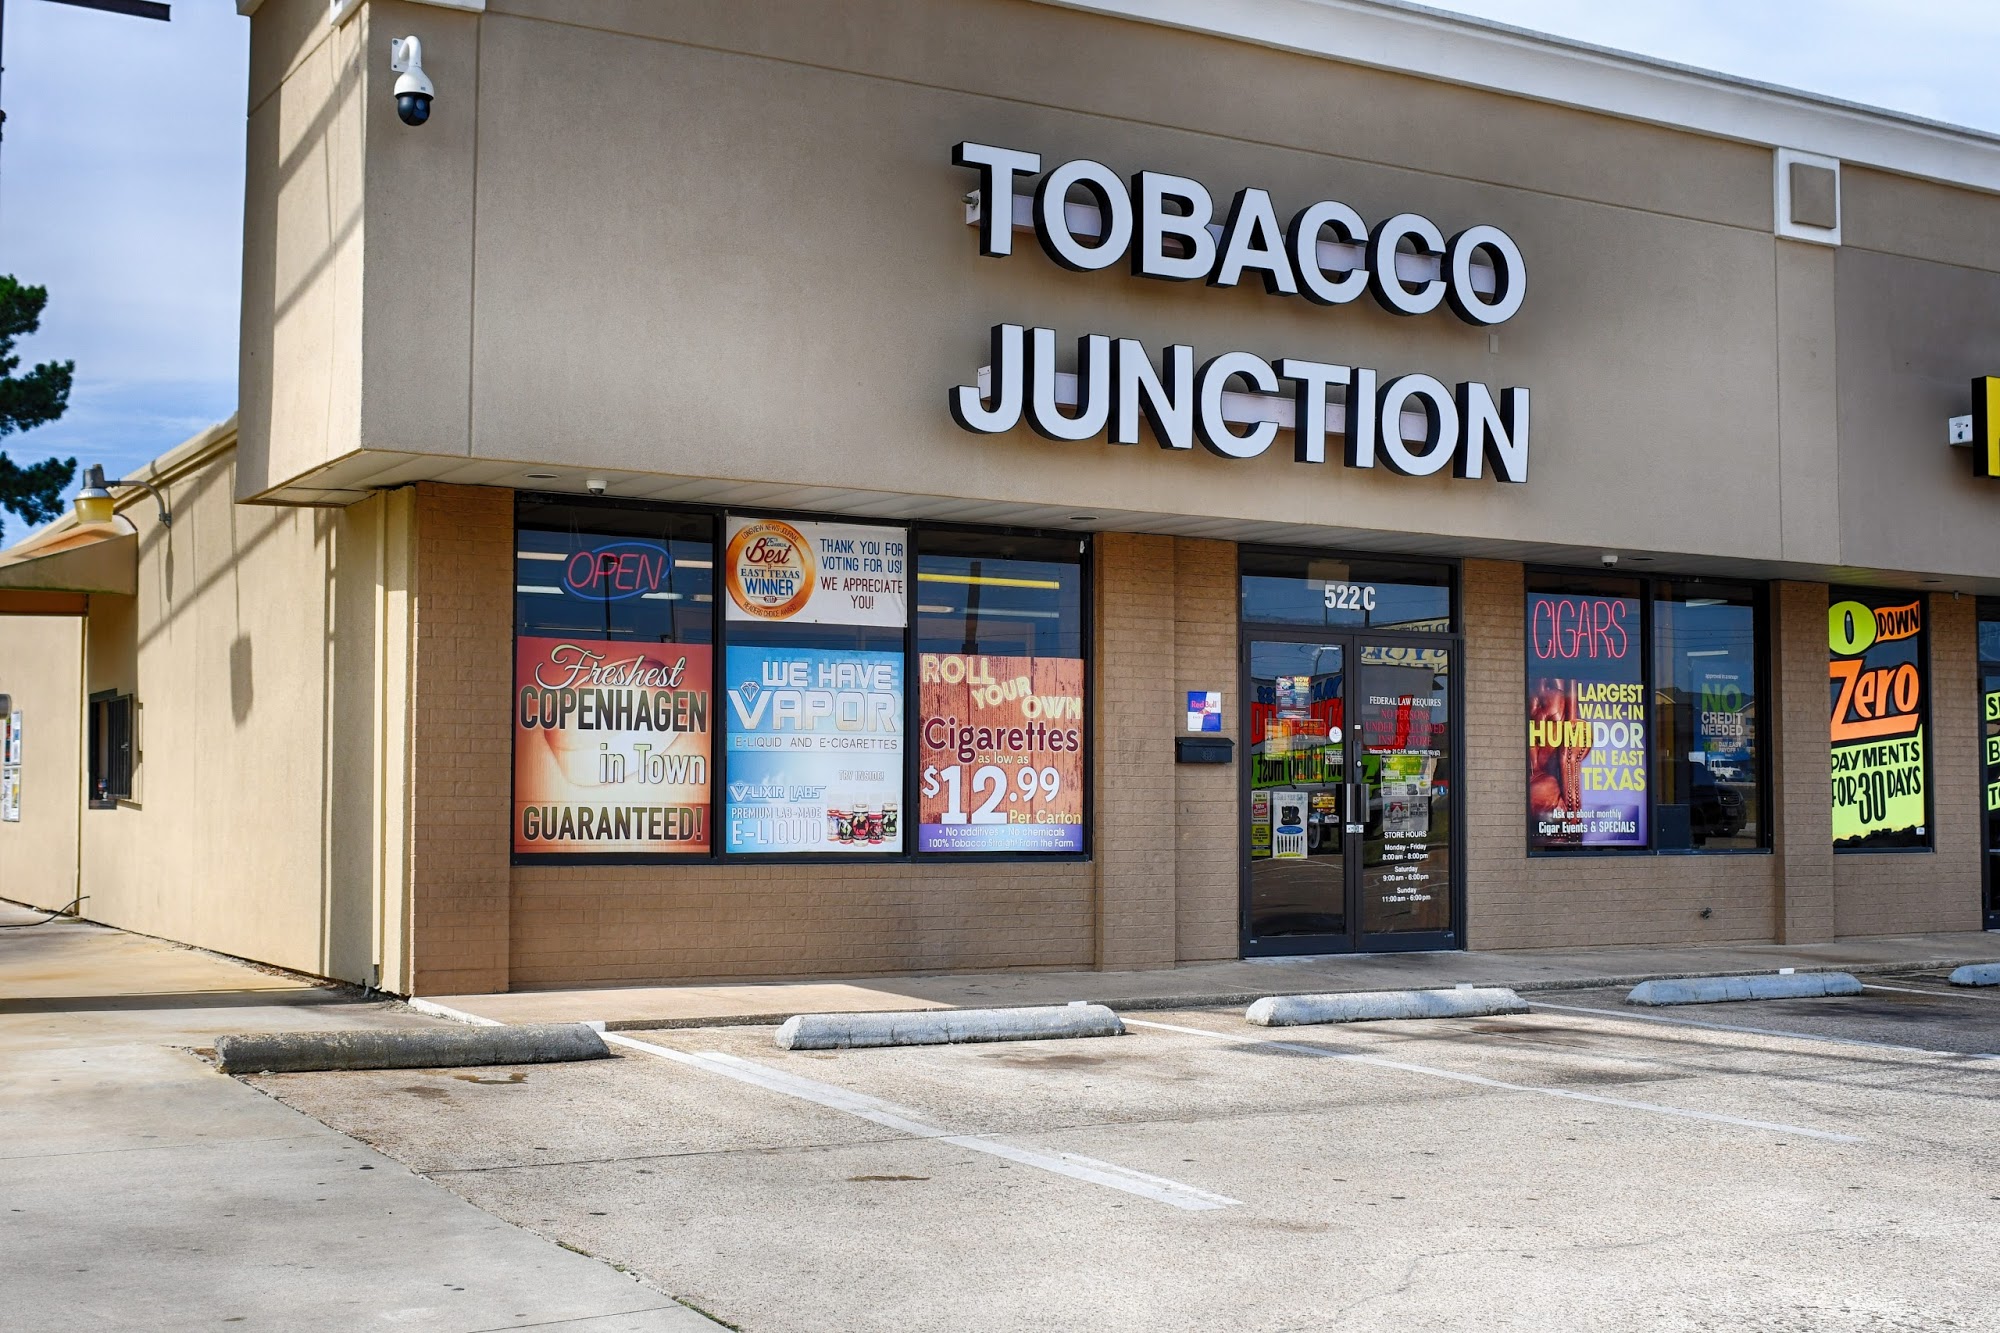 Tobacco Junction of Longview - East